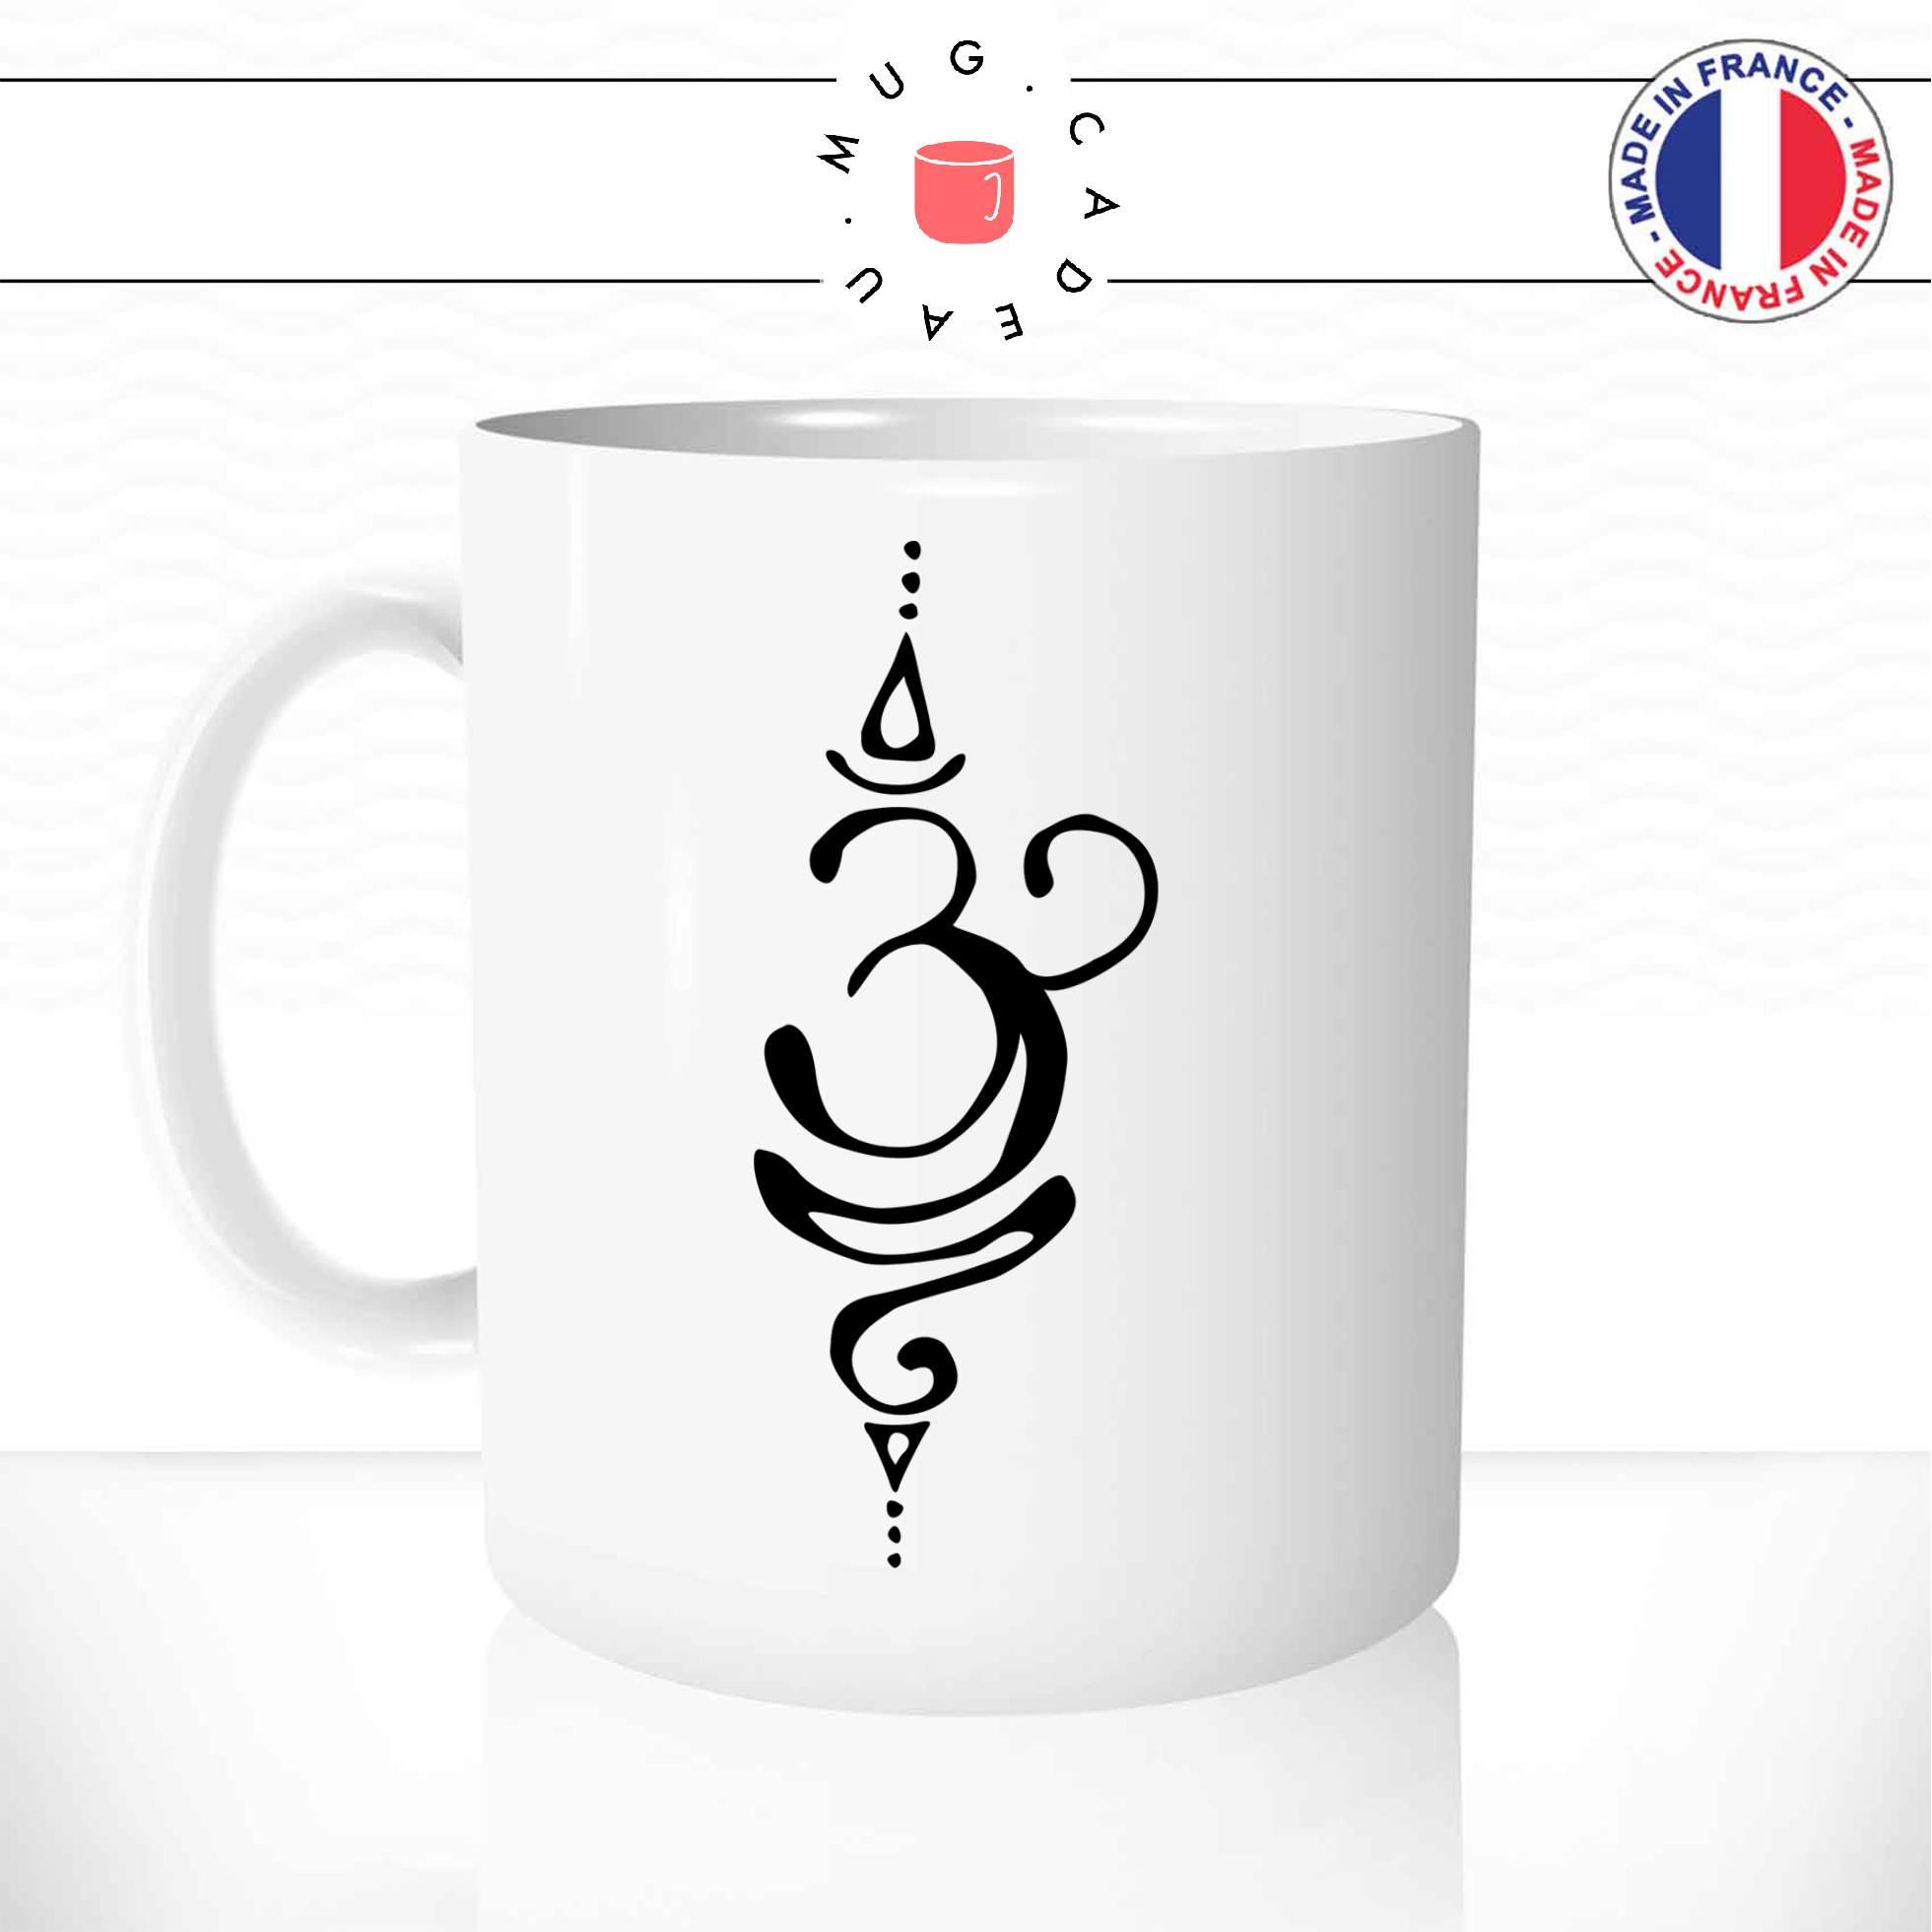 mug-tasse-ref3-religions-bouddhiste-OM-Dieu-symbol-dessin-arabesques-cafe-the-mugs-tasses-personnalise-anse-gauche